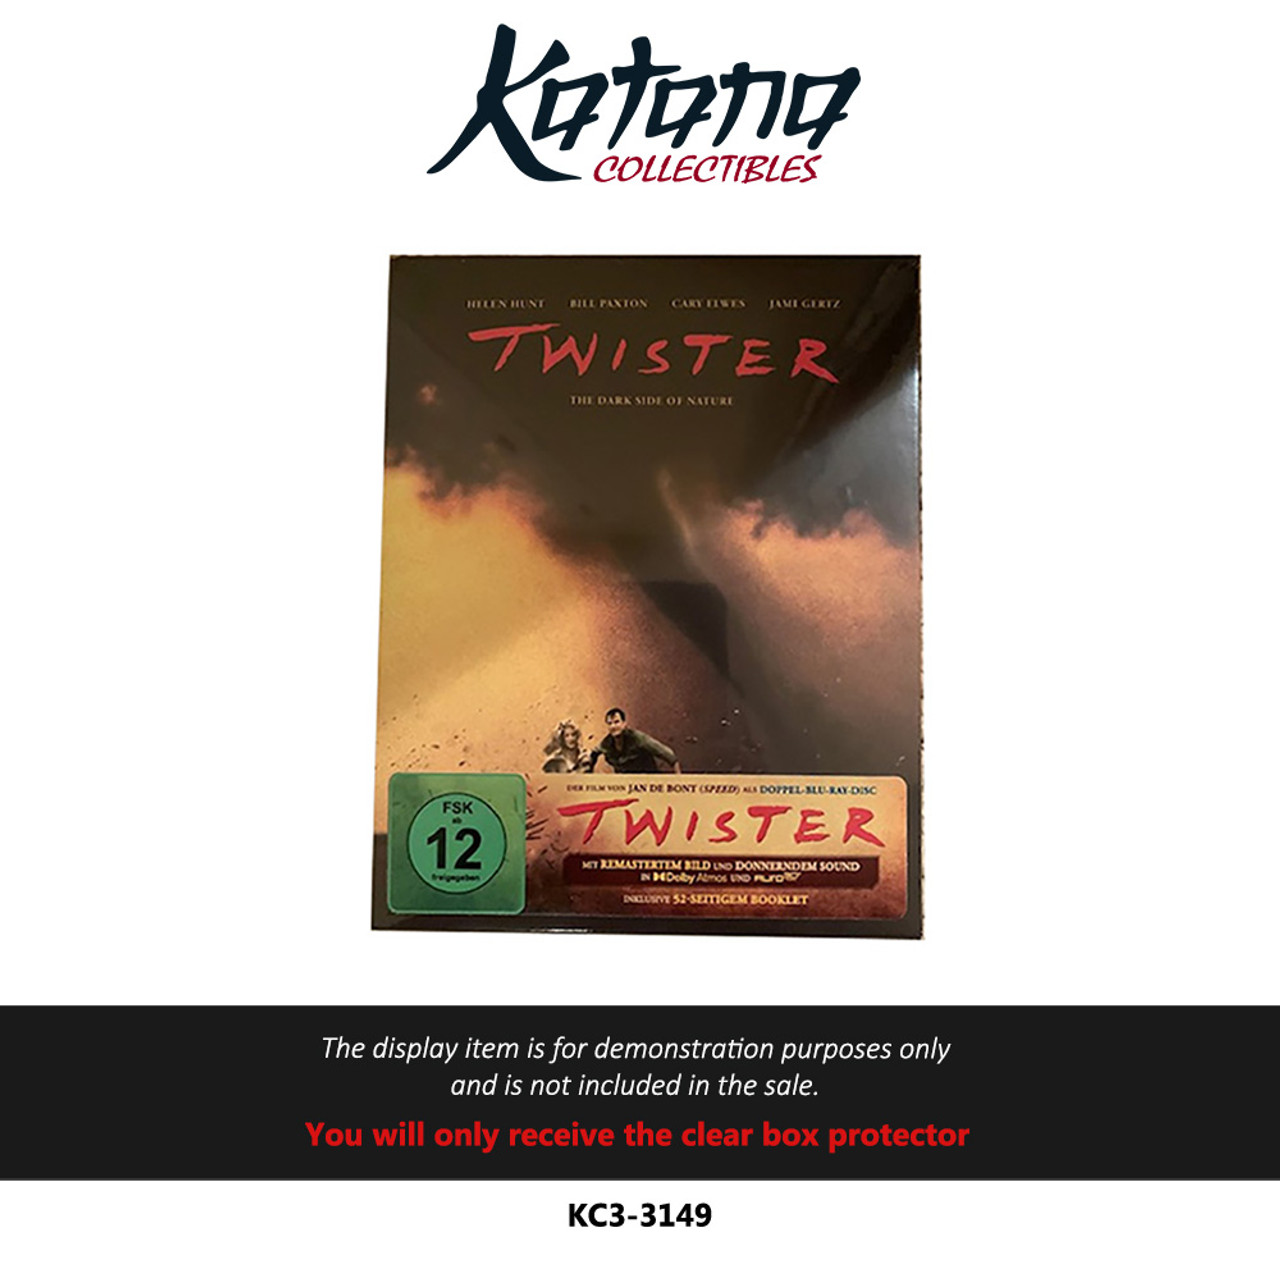 Katana Collectibles Protector For Twister